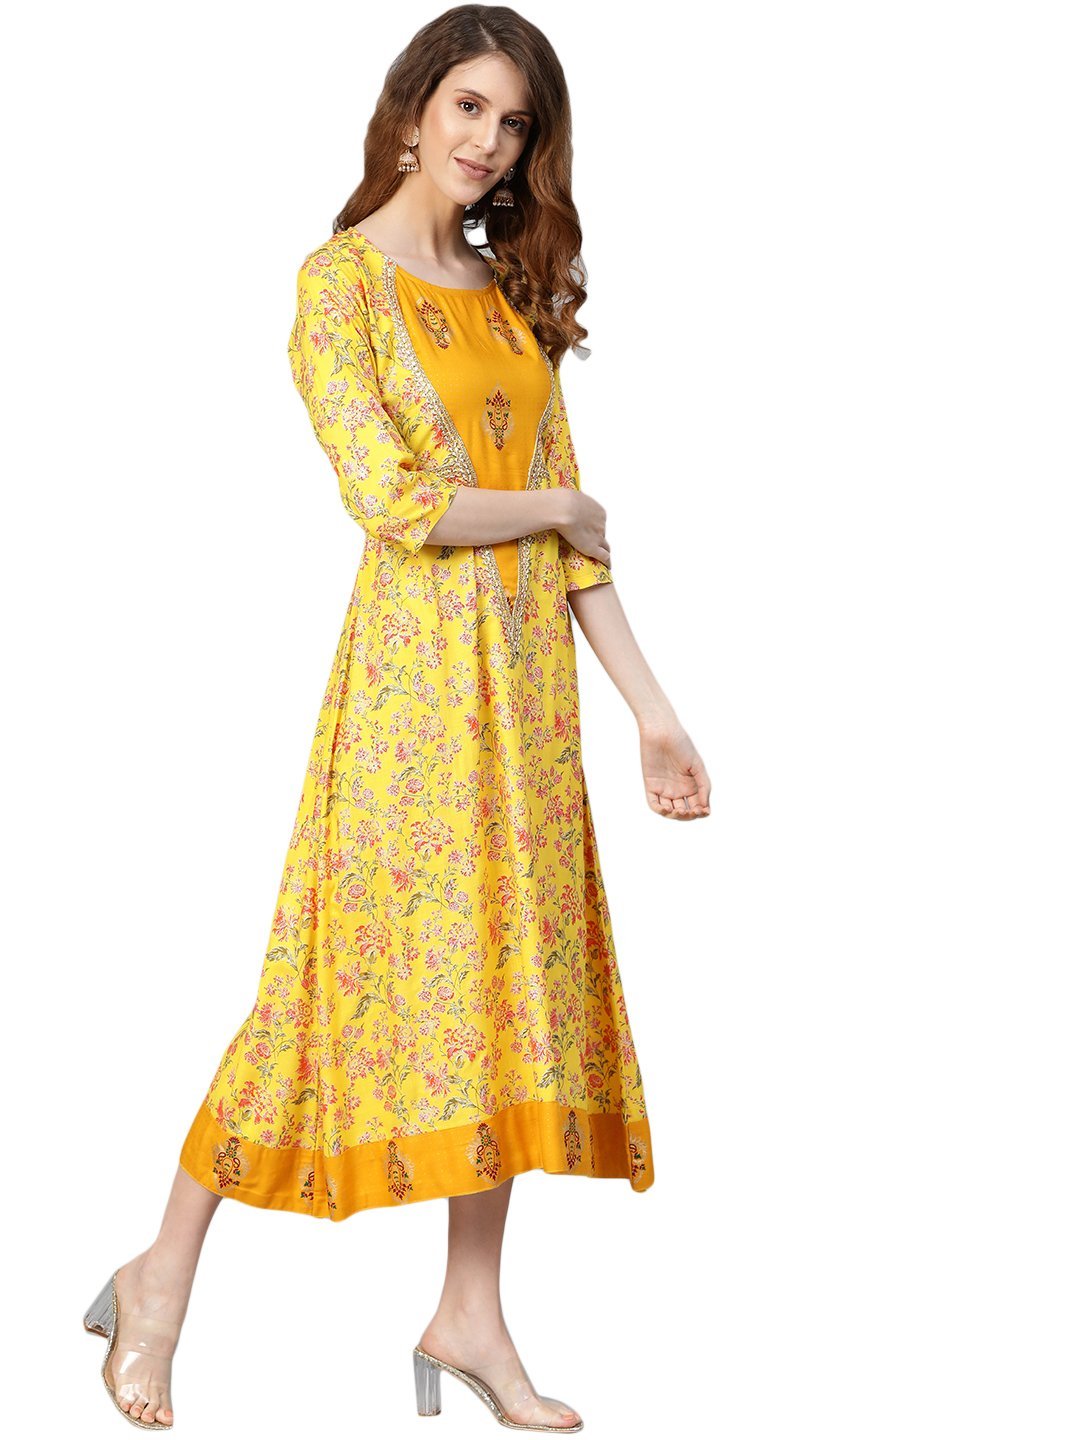 Women's Yellow Printed 3/4 Sleeve Cotton Slub Round Neck Casual Dress - Myshka